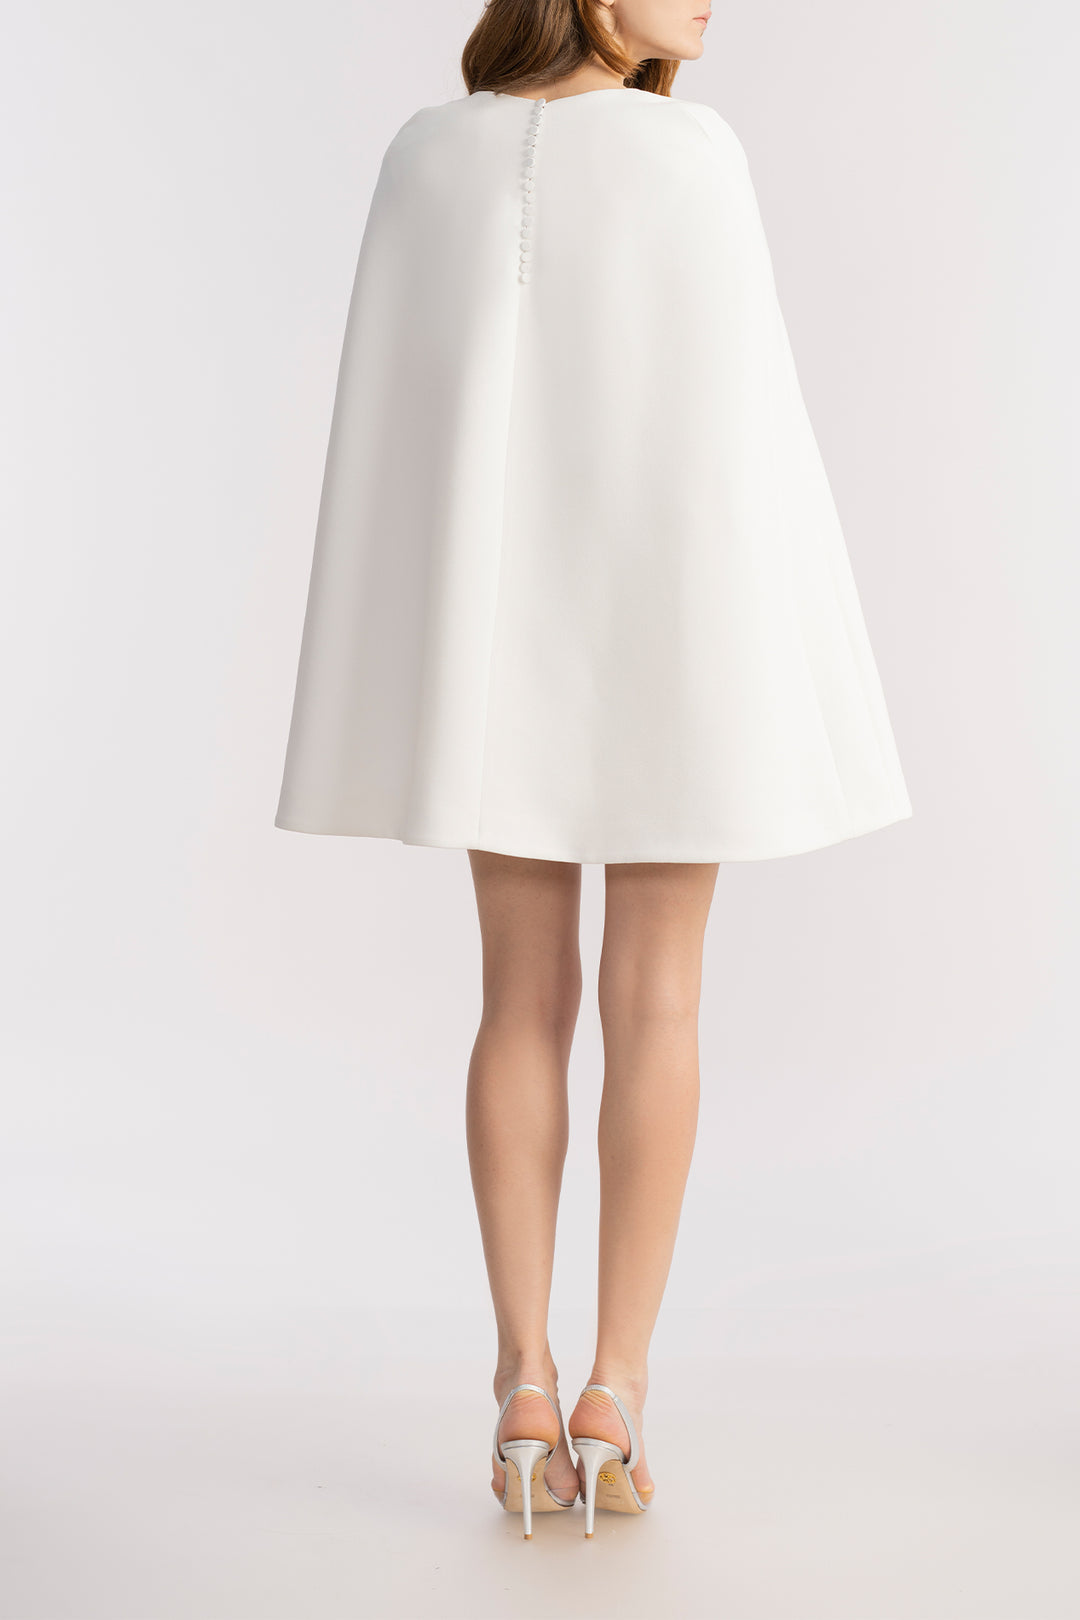 Dalia Cape-Effect Ivory Dress